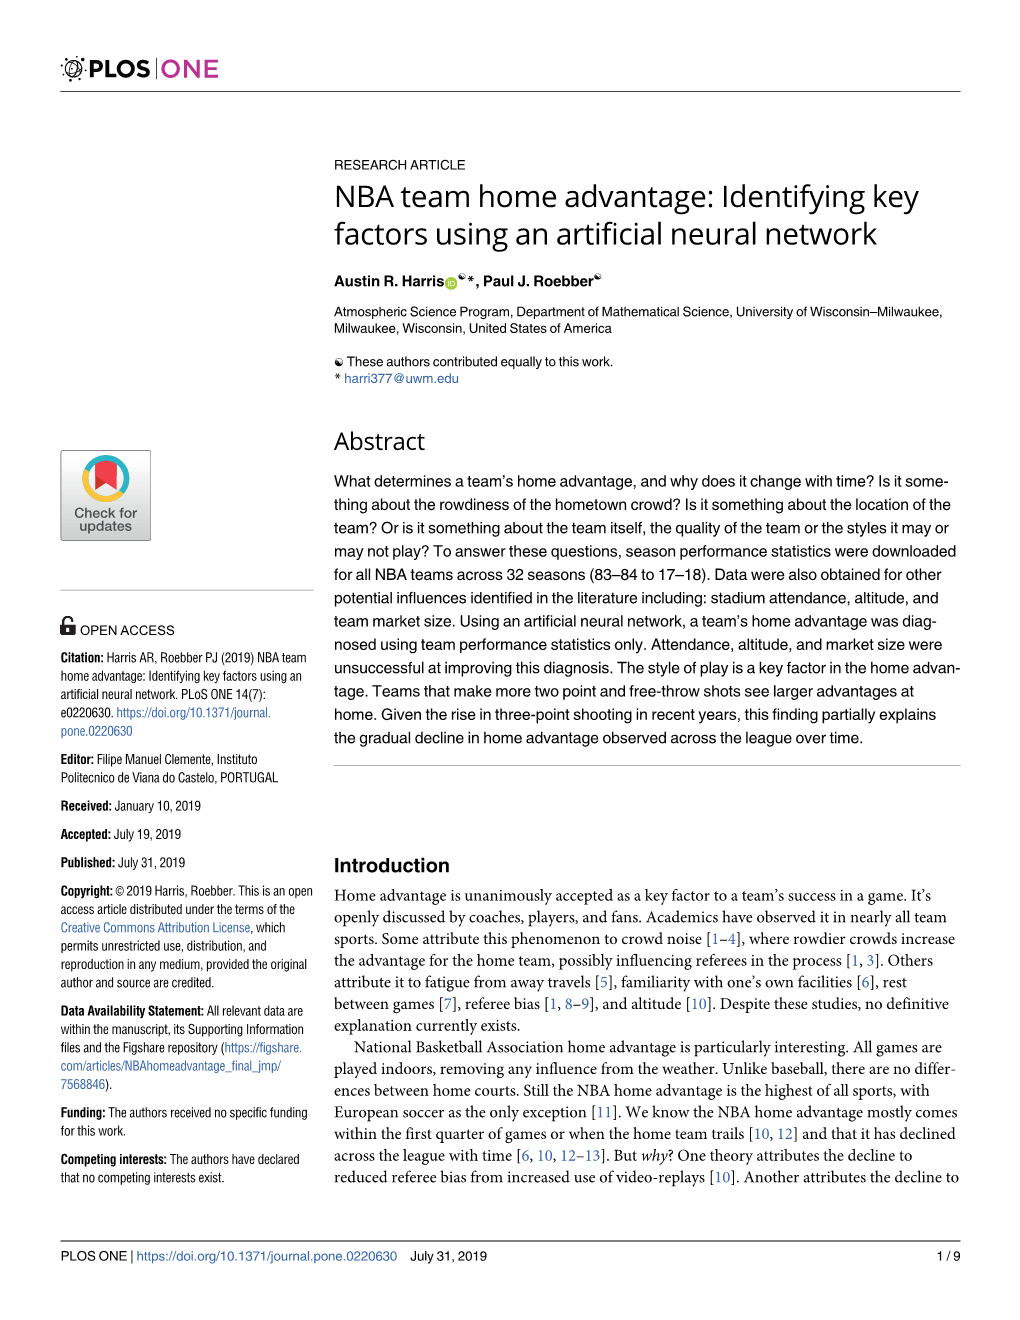 NBA Team Home Advantage: Identifying Key Factors Using an Artificial Neural Network